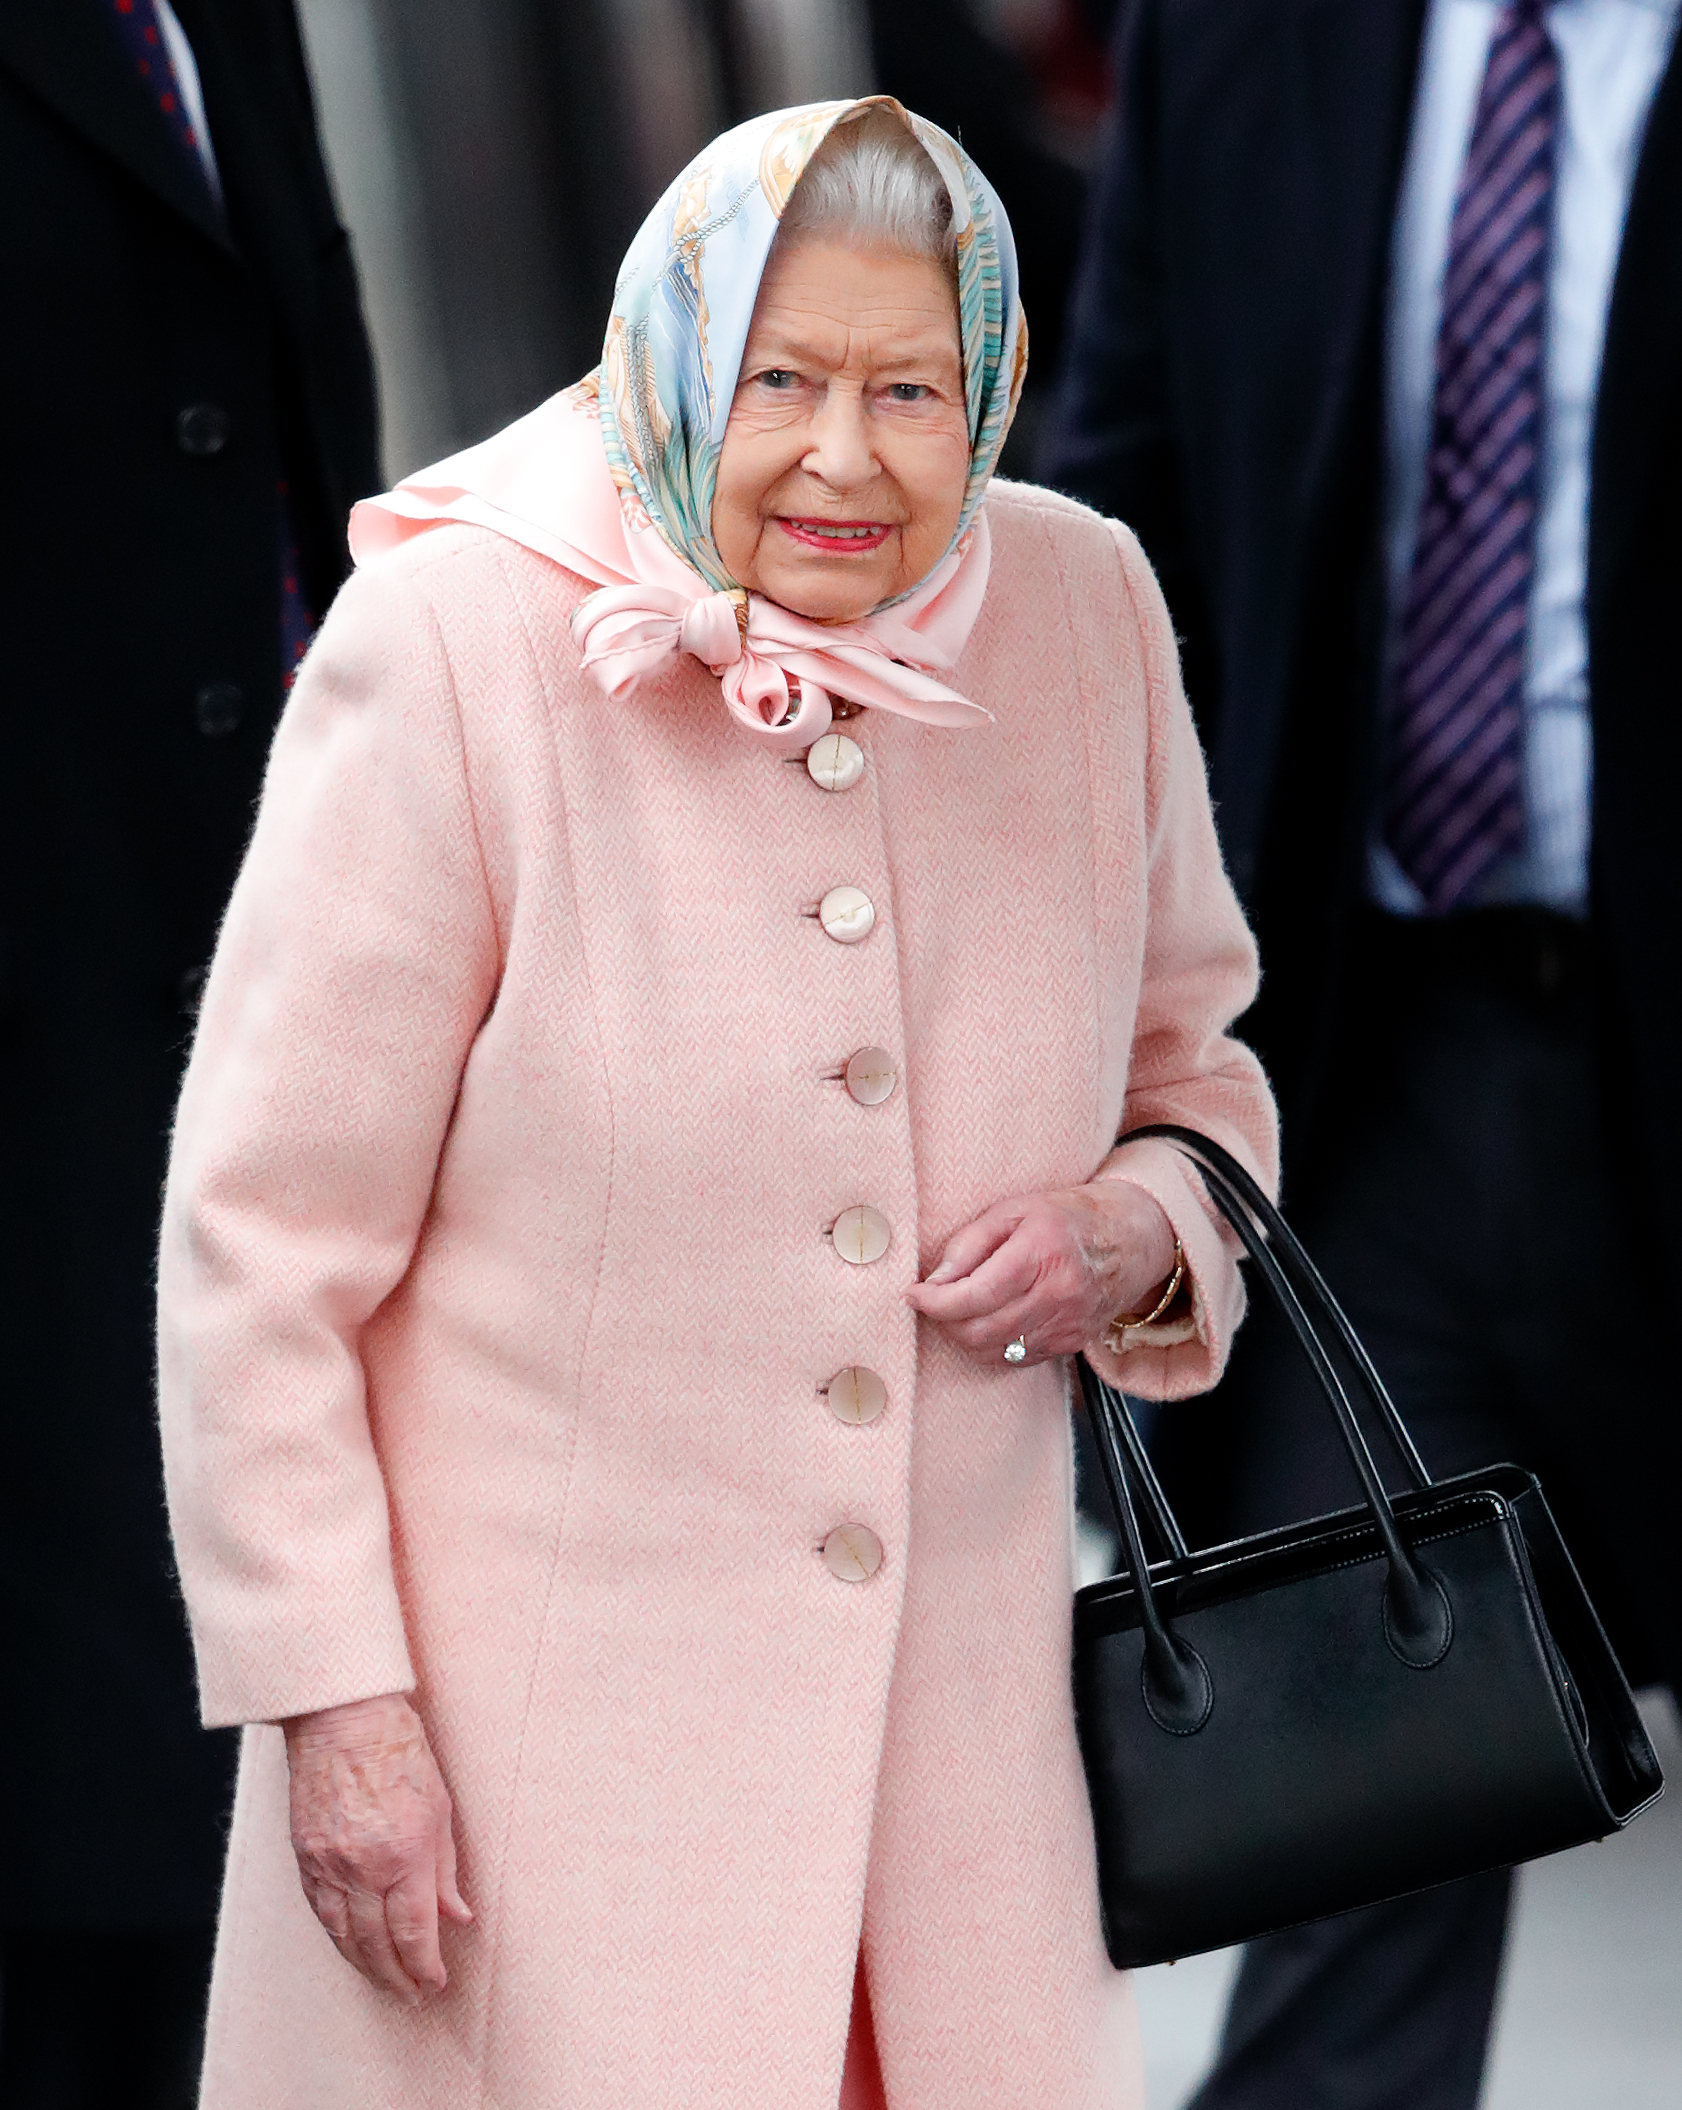 Die verstorbene Königin Elizabeth II. am Bahnhof King's Lynn in King's Lynn, England am 20. Dezember 2019 | Quelle: Getty Images